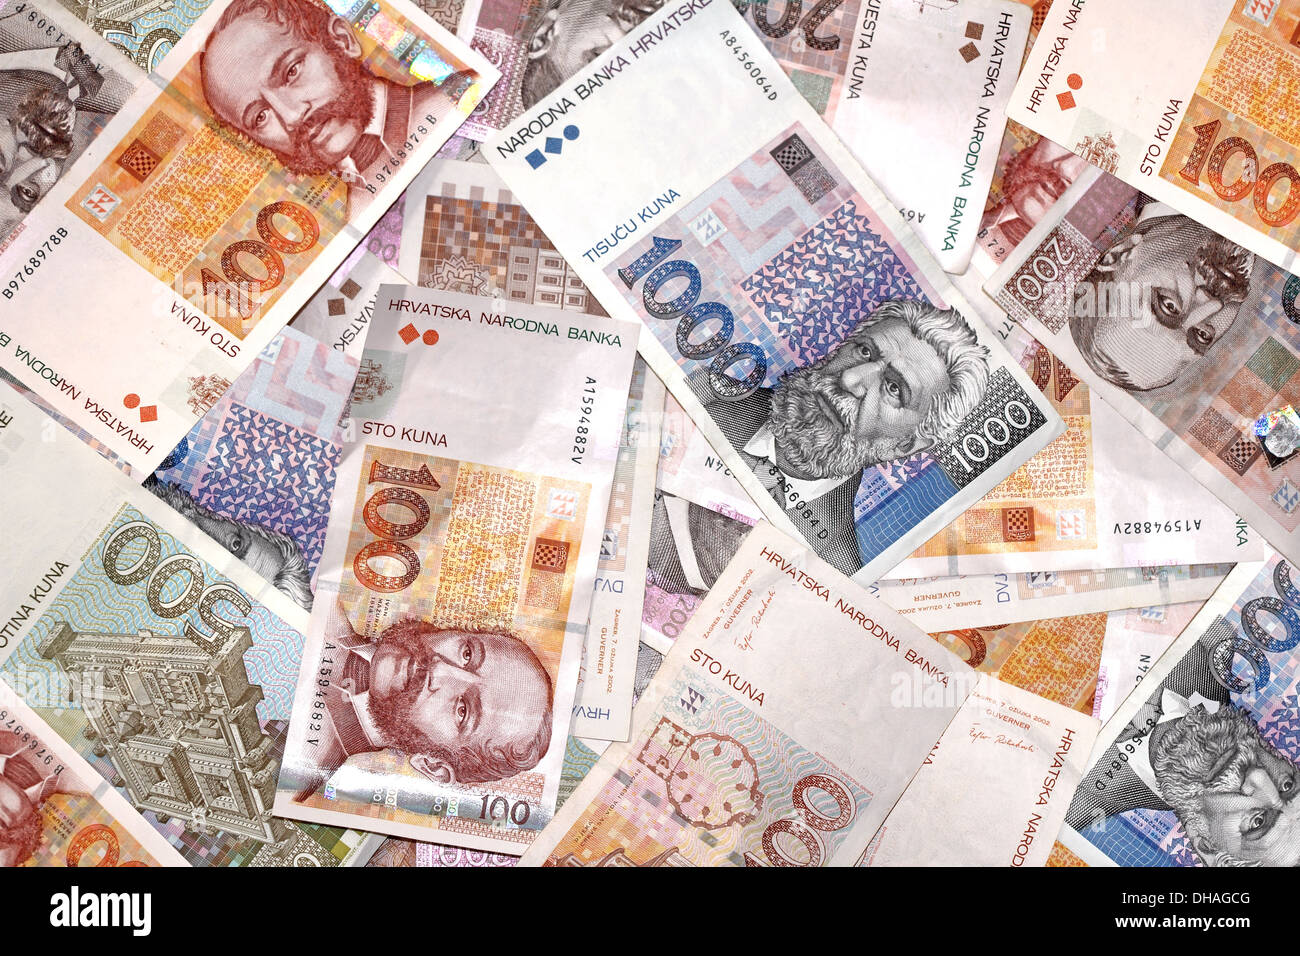 Croatian Kuna banknotes isolated on white background Stock Photo